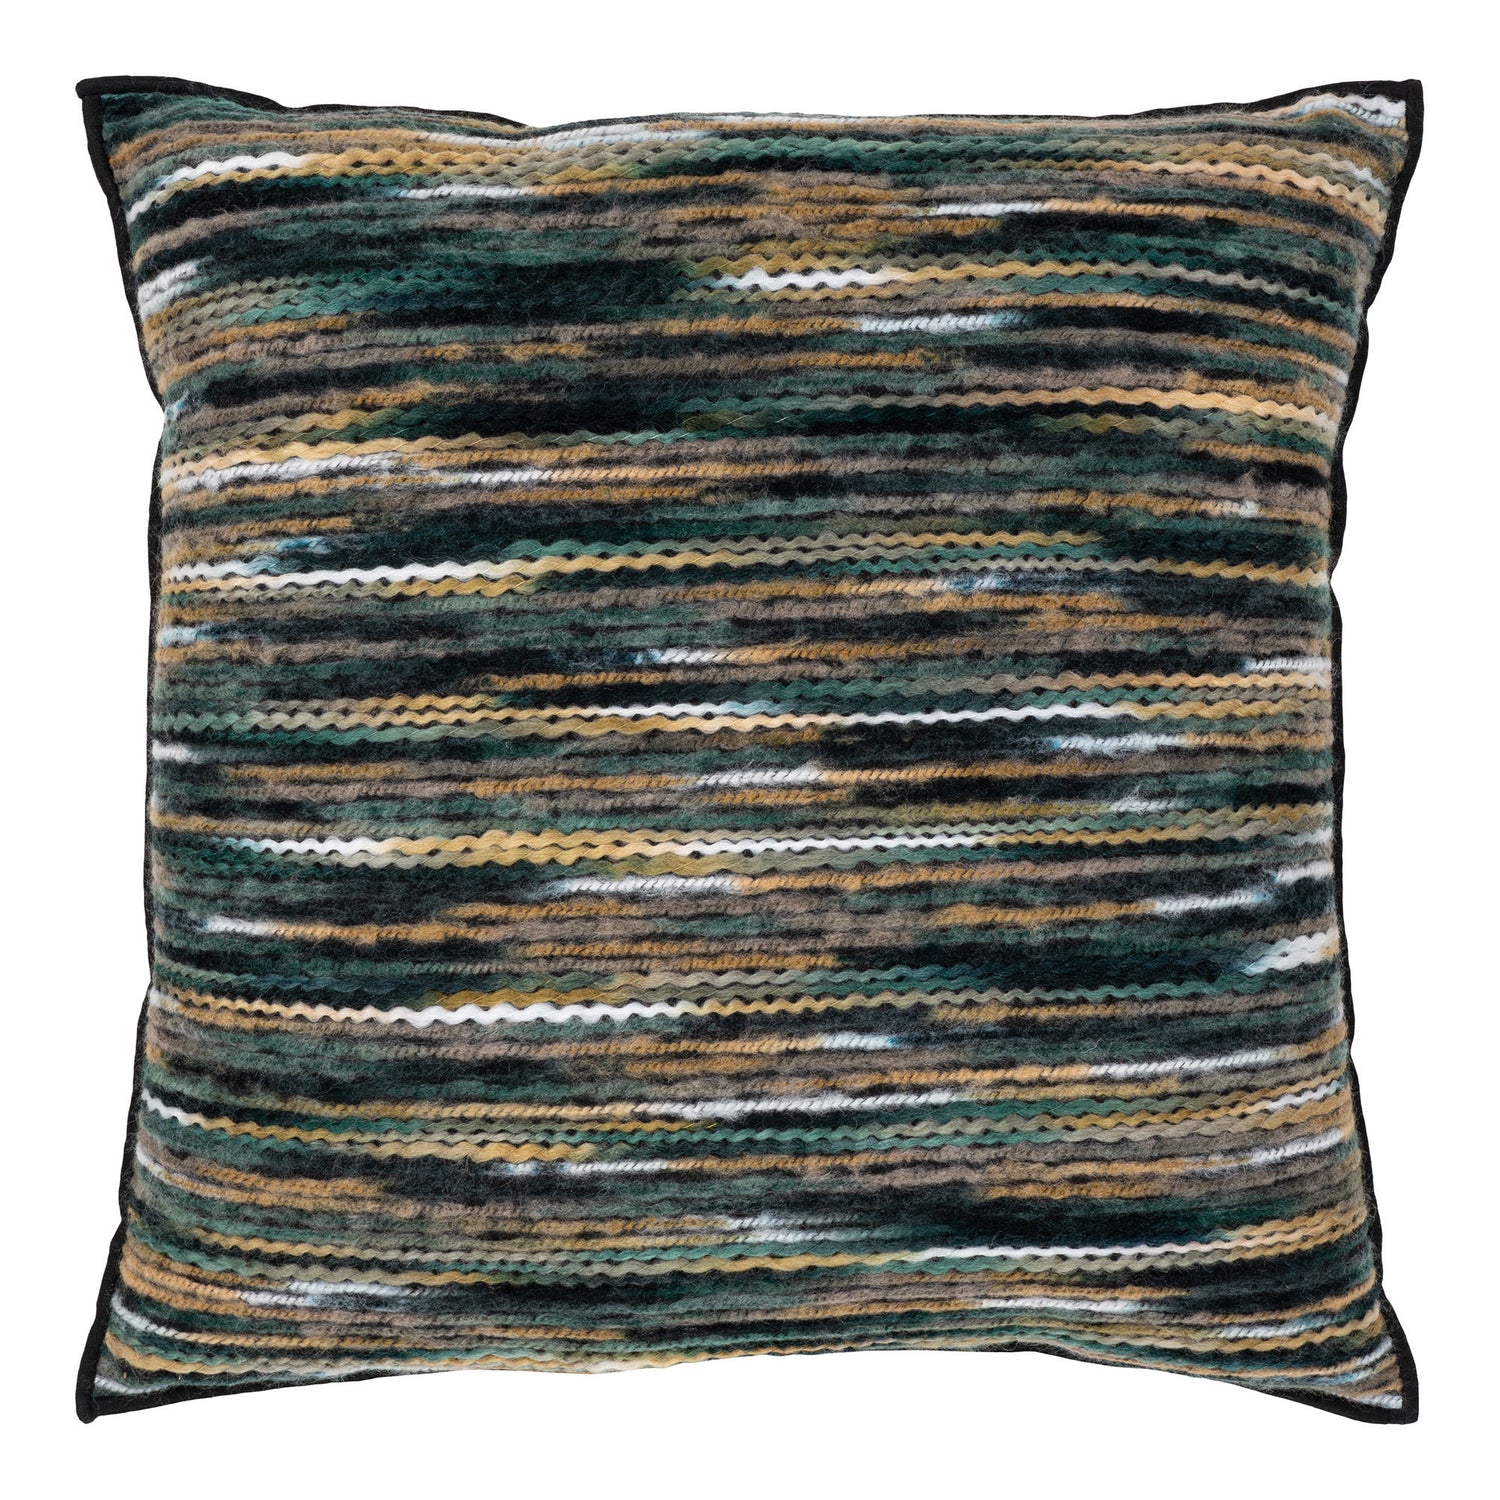 House Nordic Geelong Cushion